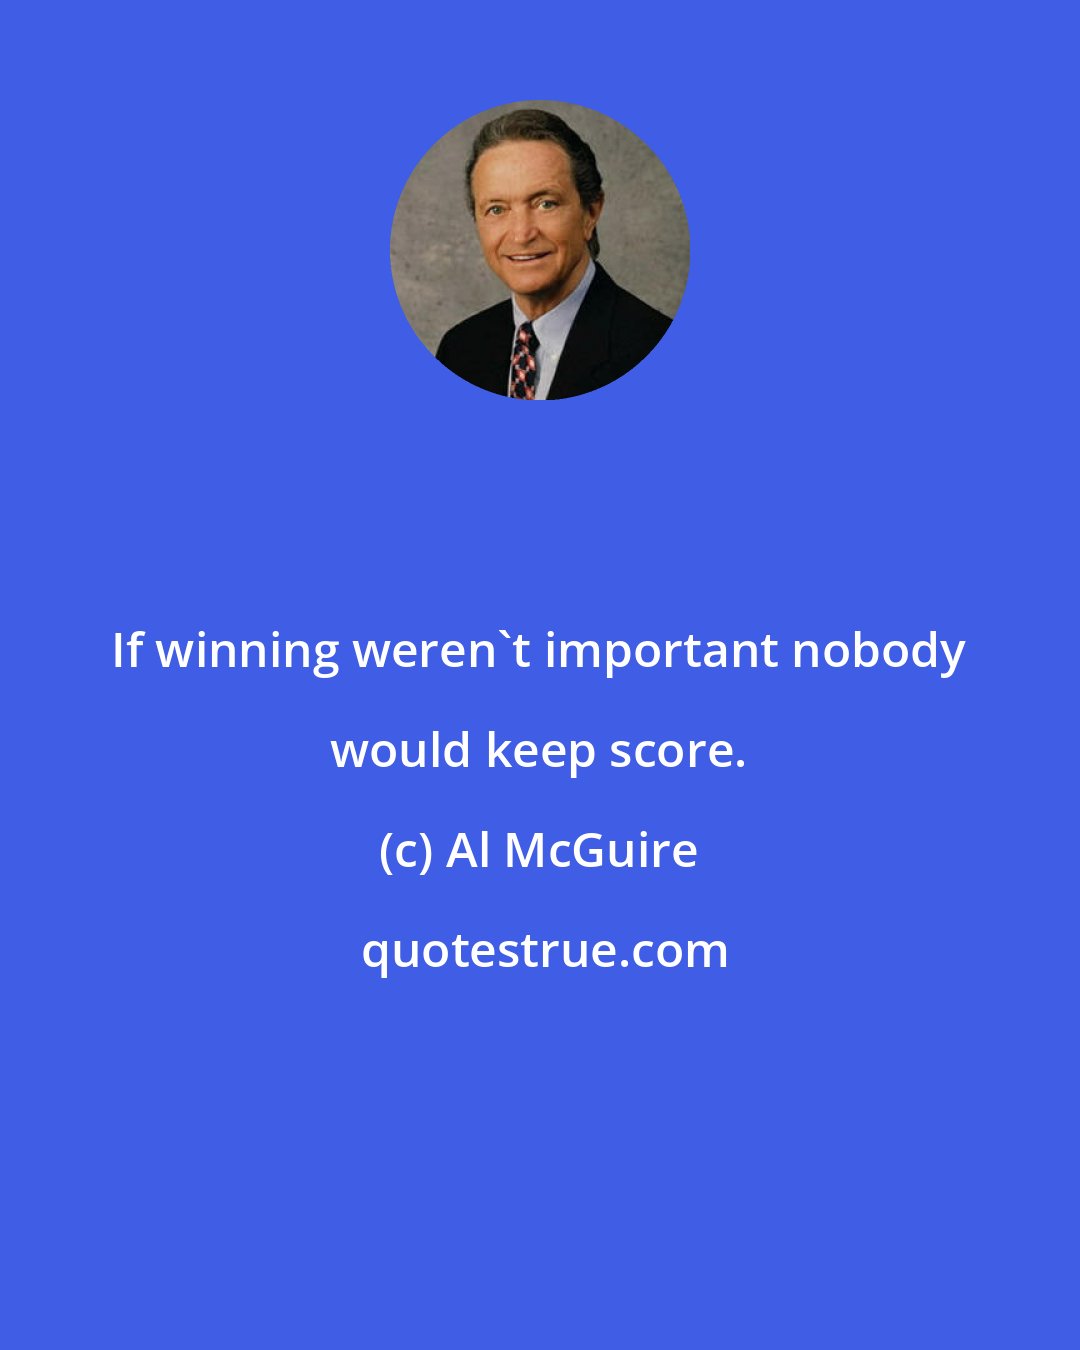 Al McGuire: If winning weren't important nobody would keep score.